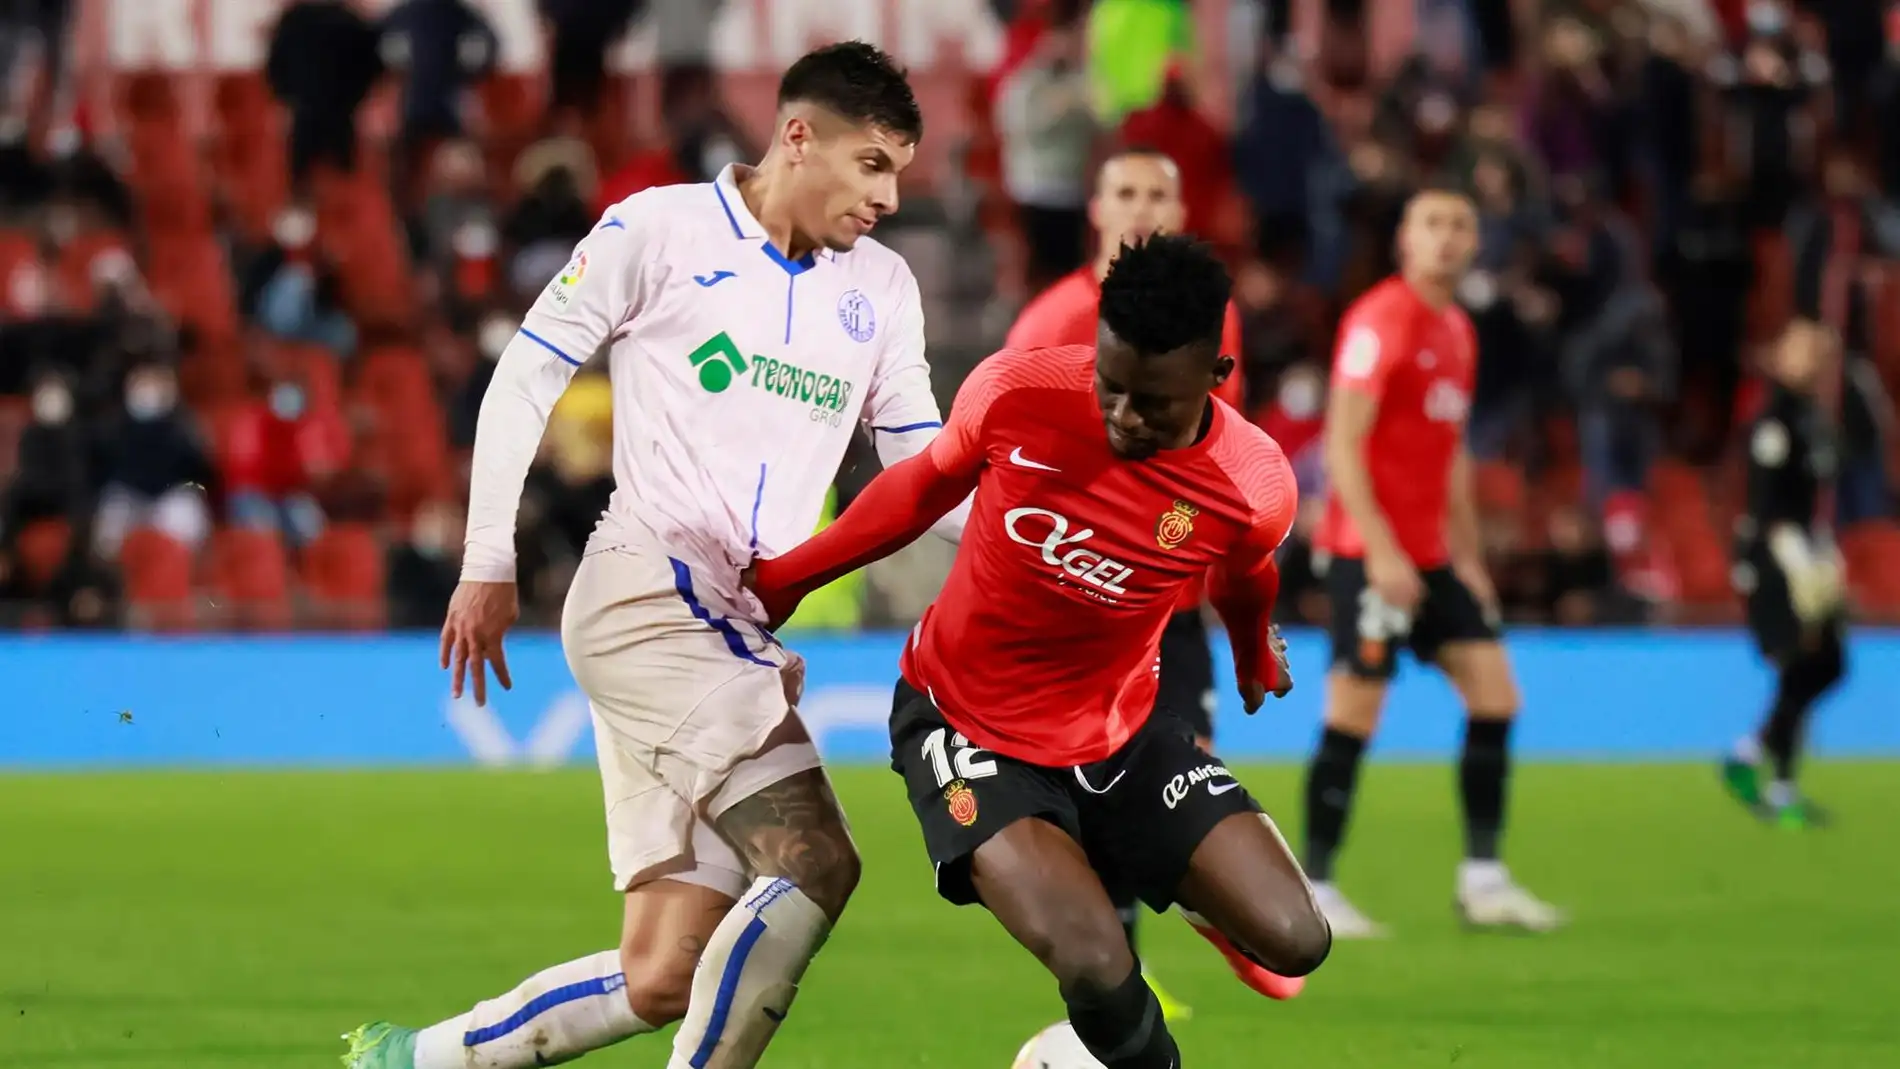 El centrocampista ghanés del Mallorca, Iddrisu Baba, disputa el balón ante el defensa uruguayo del Getafe, Mathias Olivera